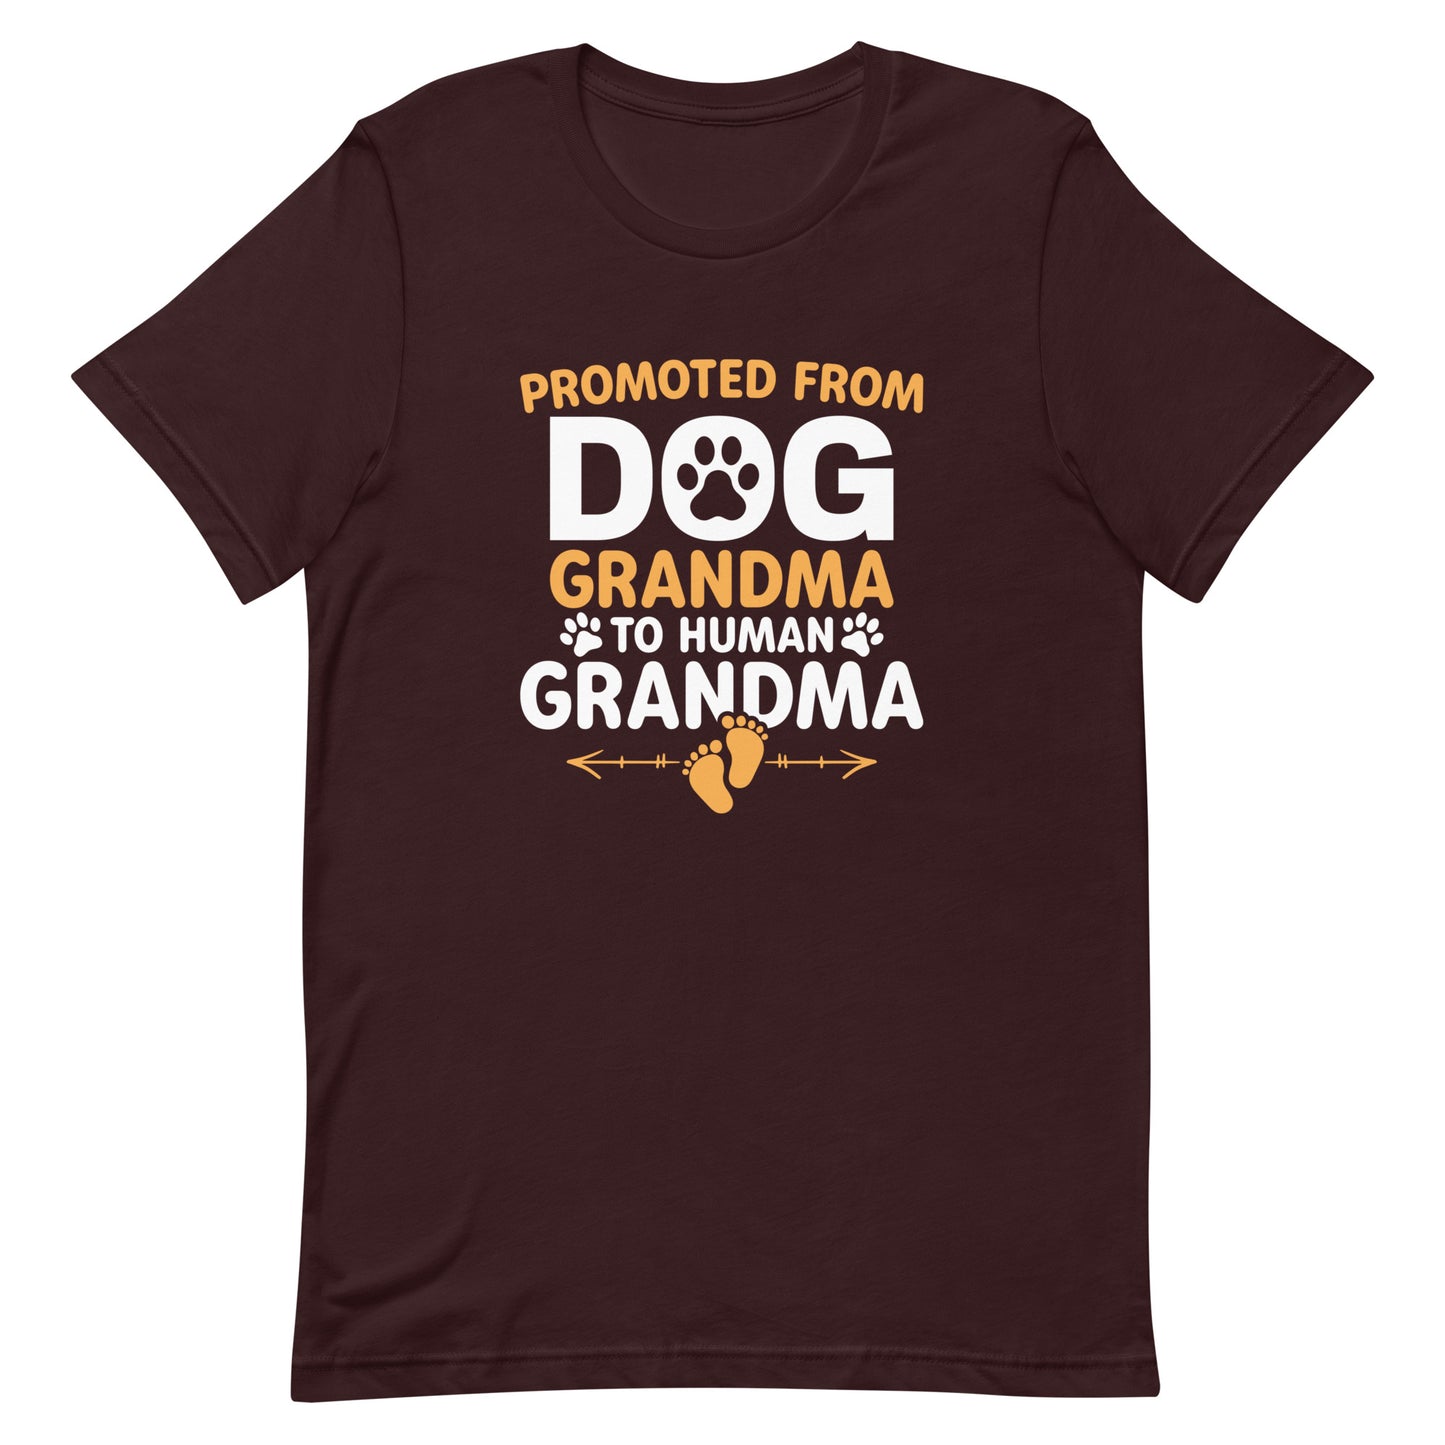 Promoted from Dog Grandma Unisex t-shirt